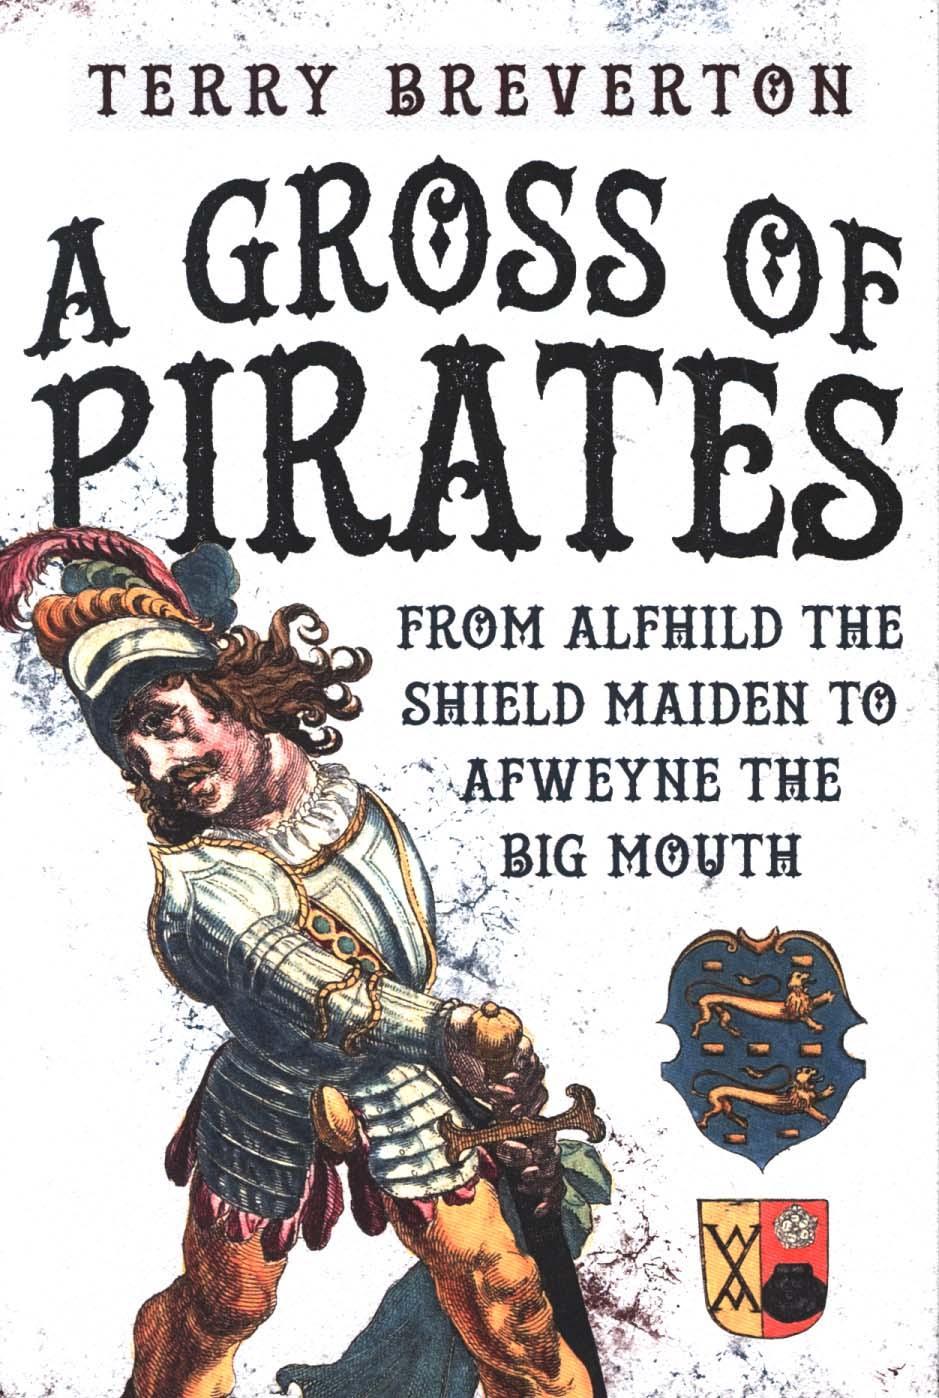 Gross of Pirates